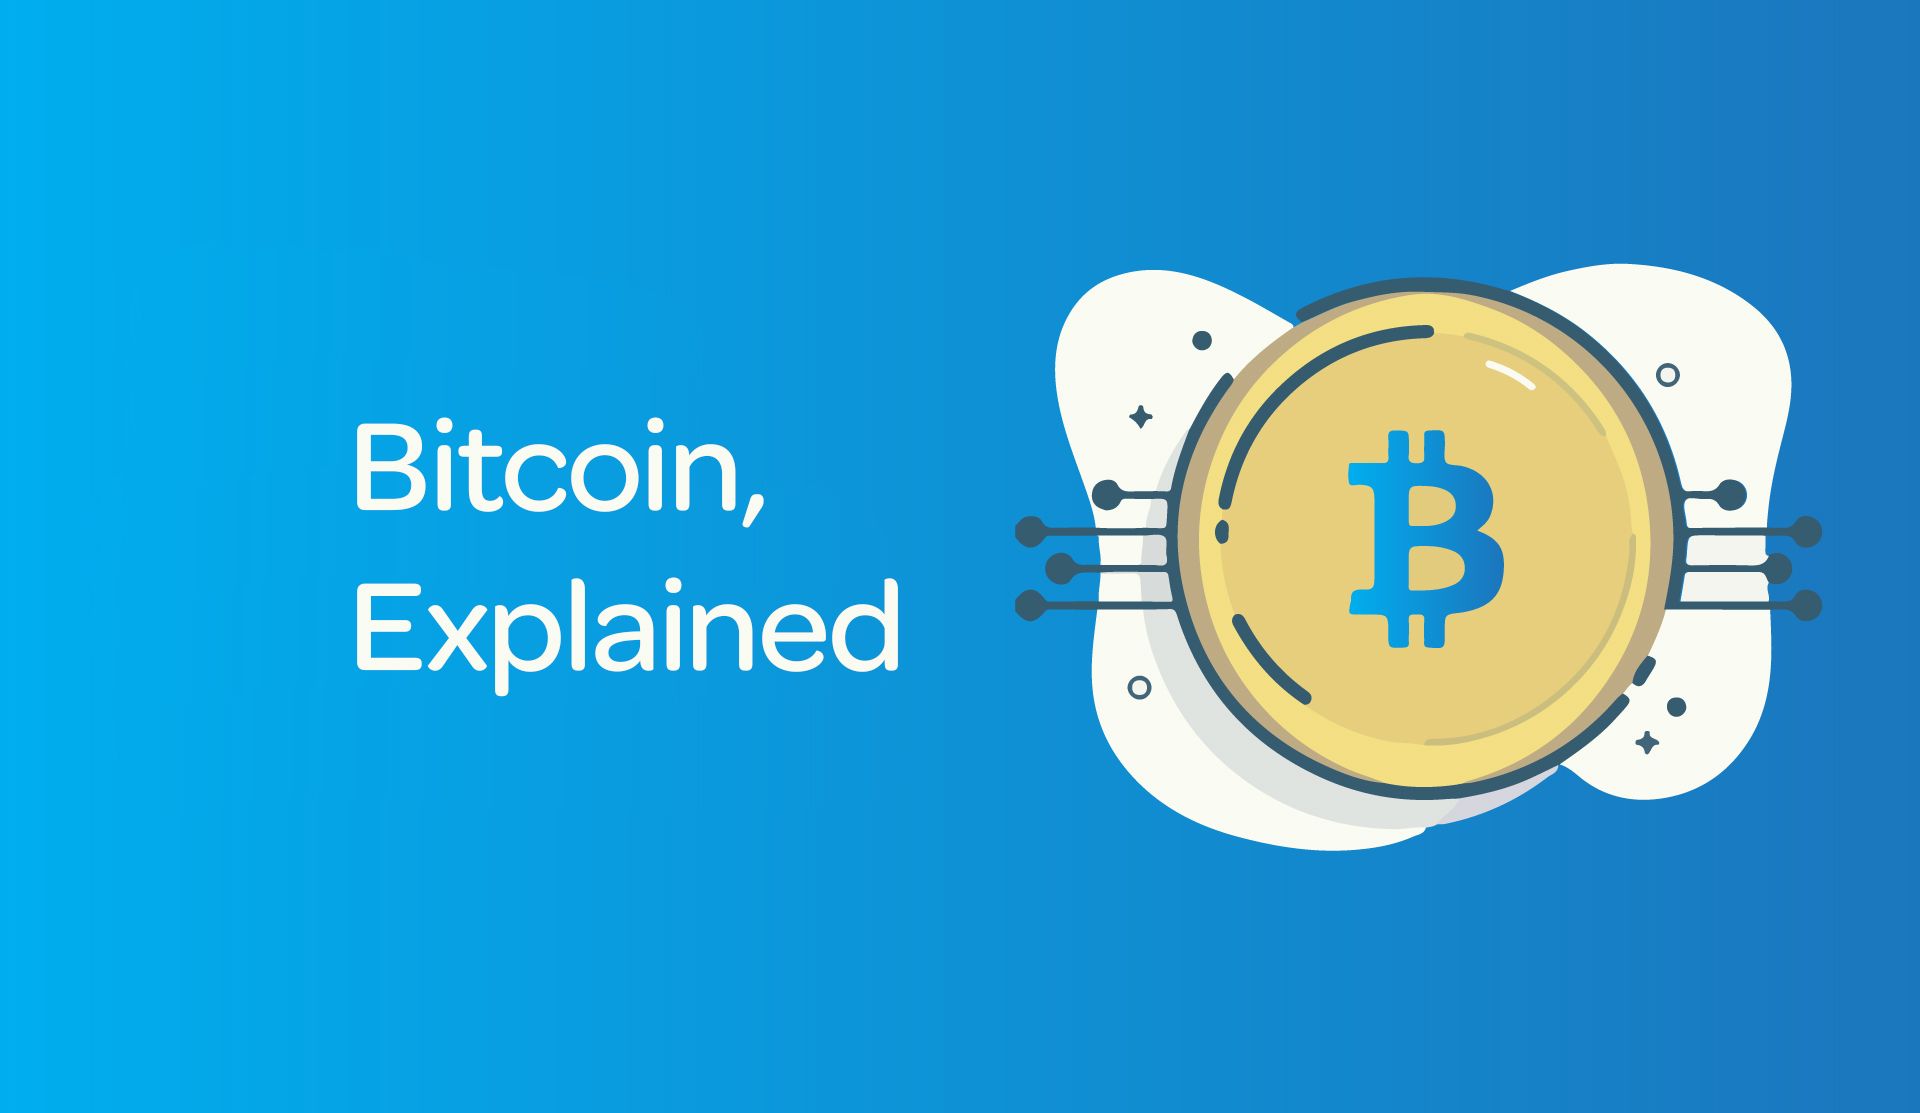 bitcoins easily explained ucs